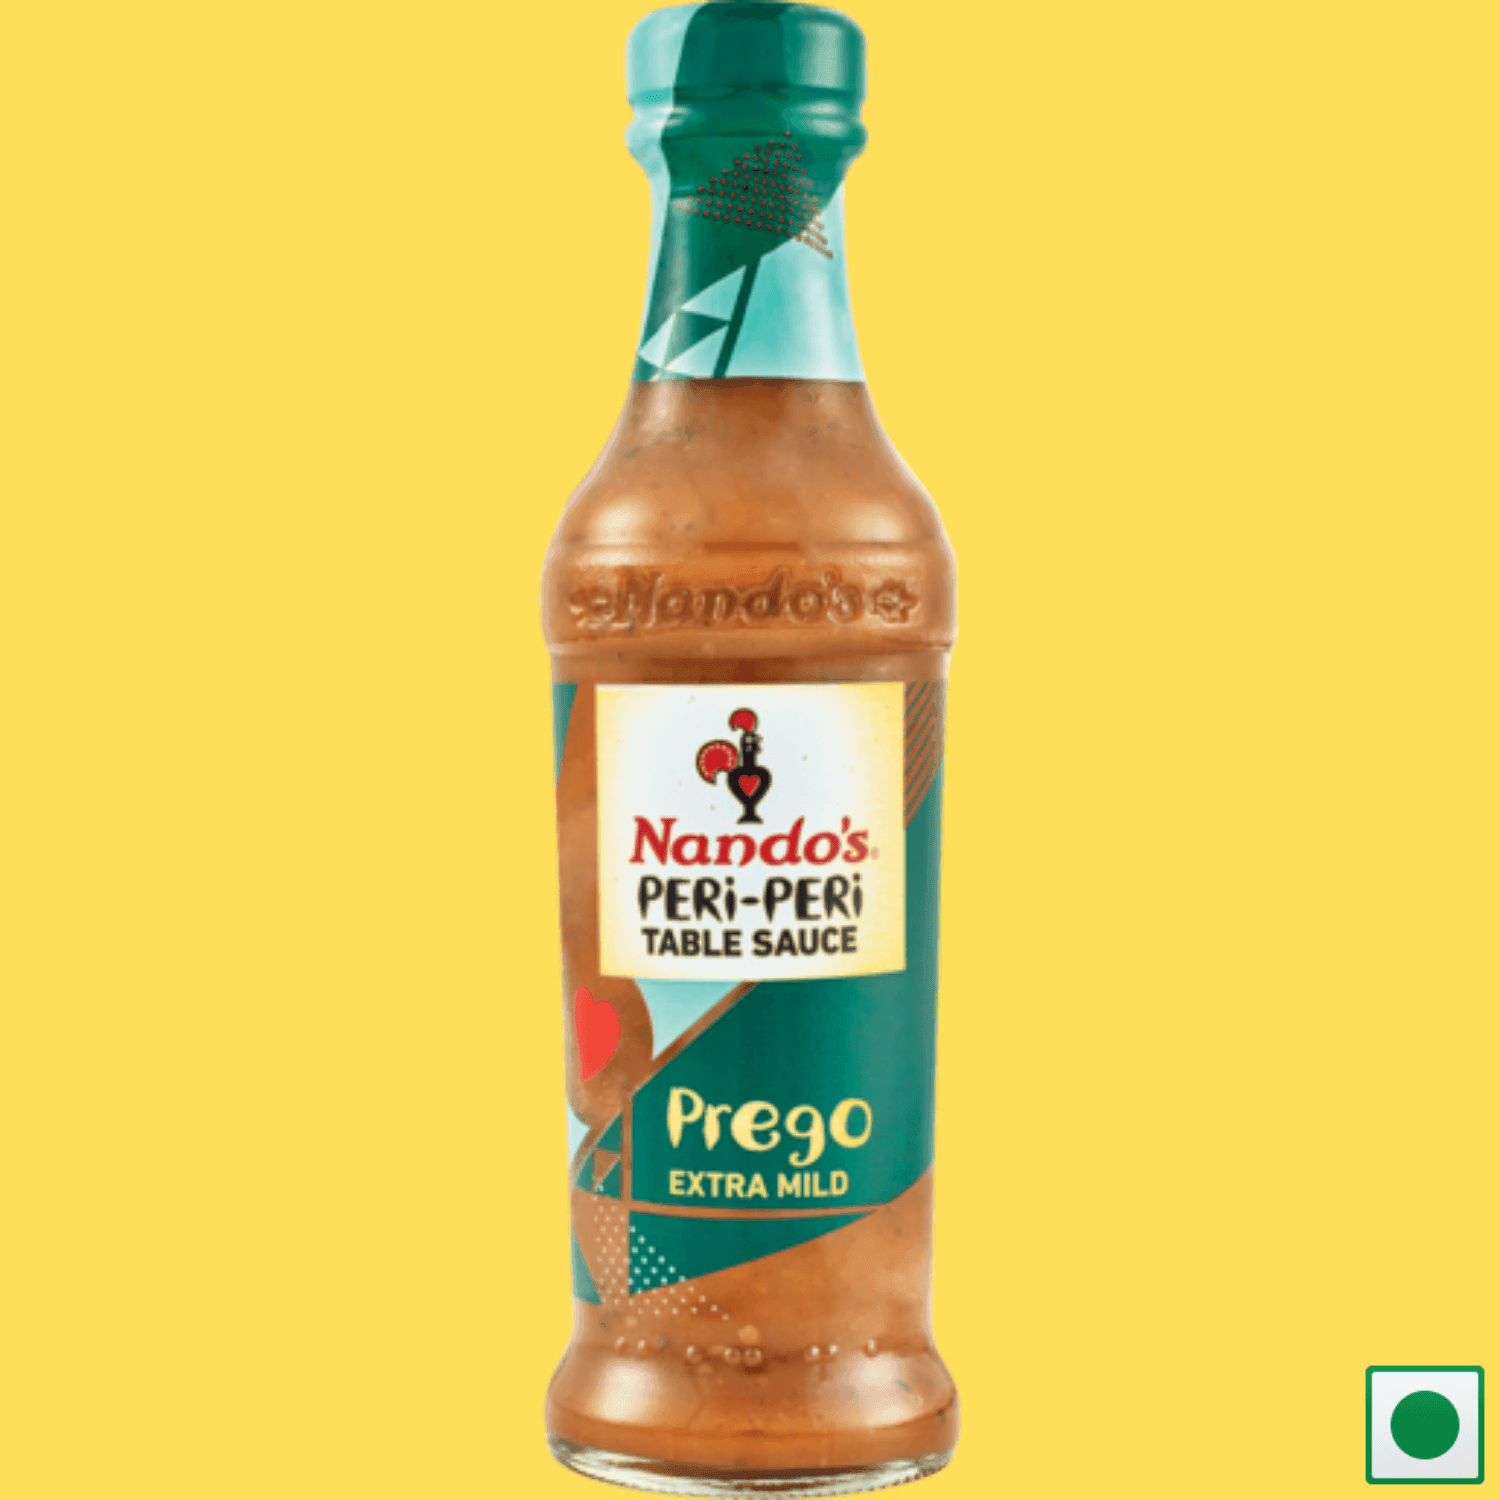 Nando's Extra Mild Prego Peri-Peri Sauce, 250g (Imported) - Super 7 Mart